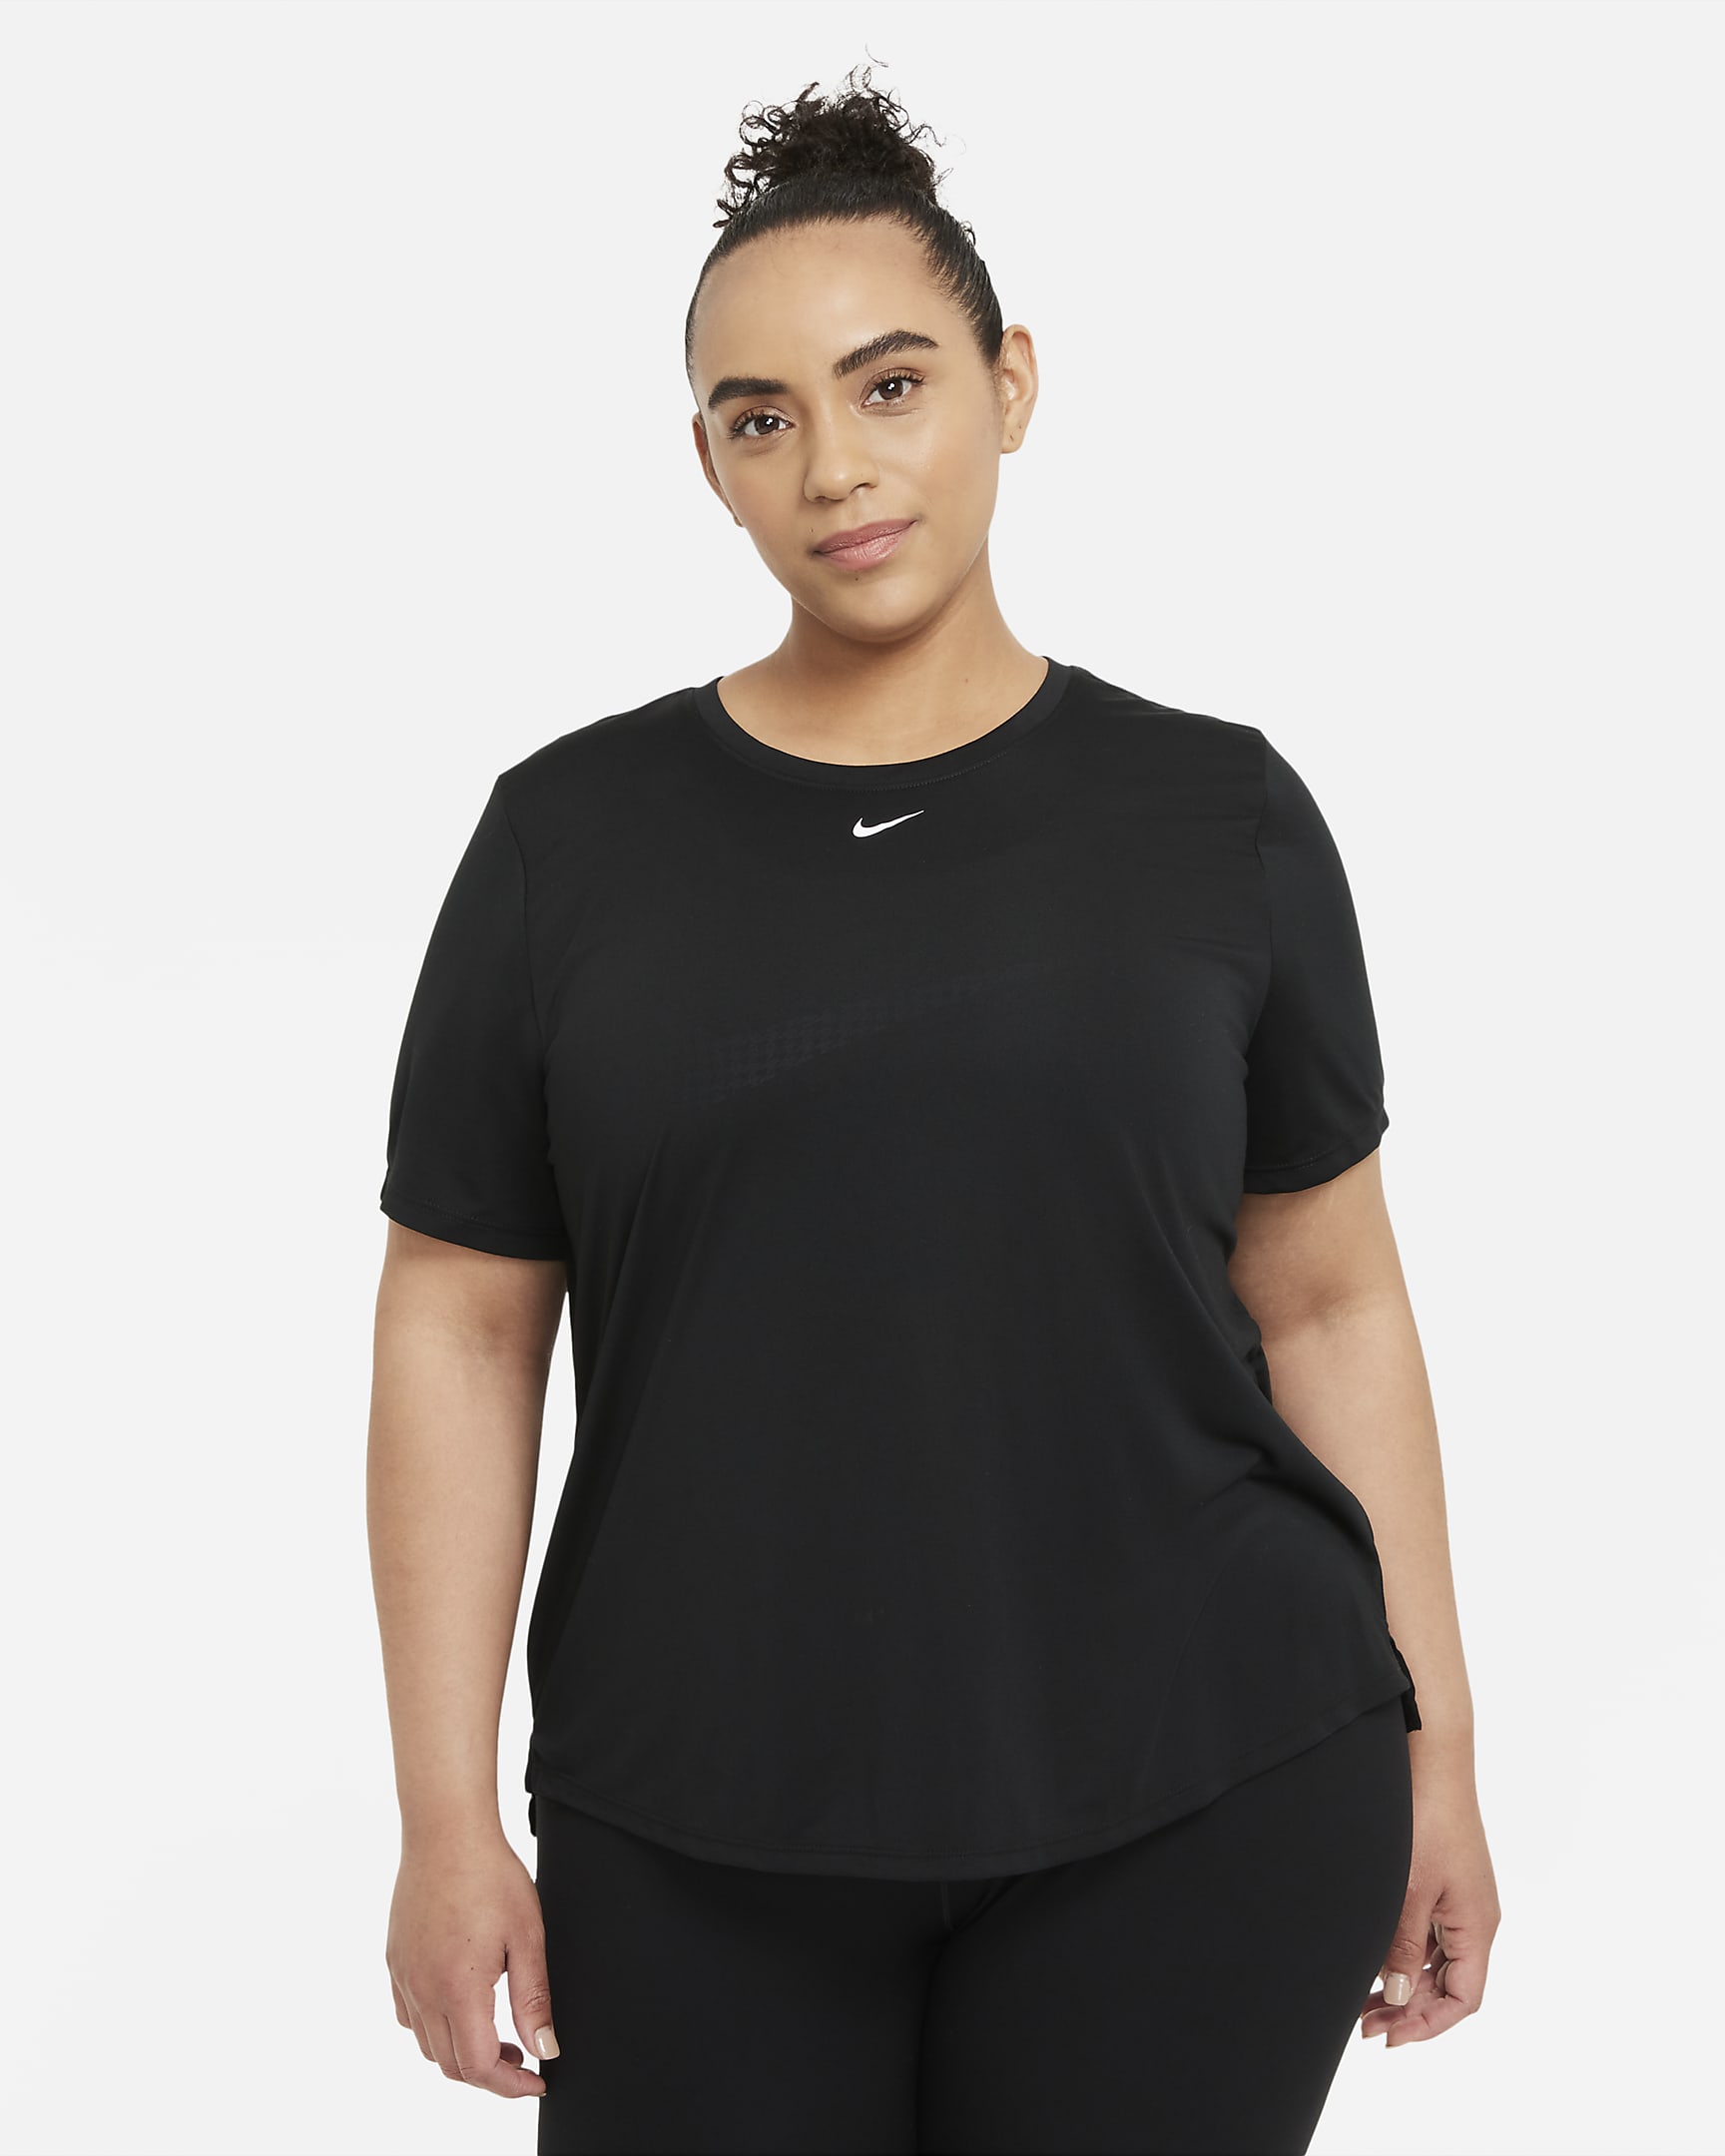 Nike Dri-FIT One Women's Standard-Fit Short-Sleeve Top (Plus Size). Nike BG